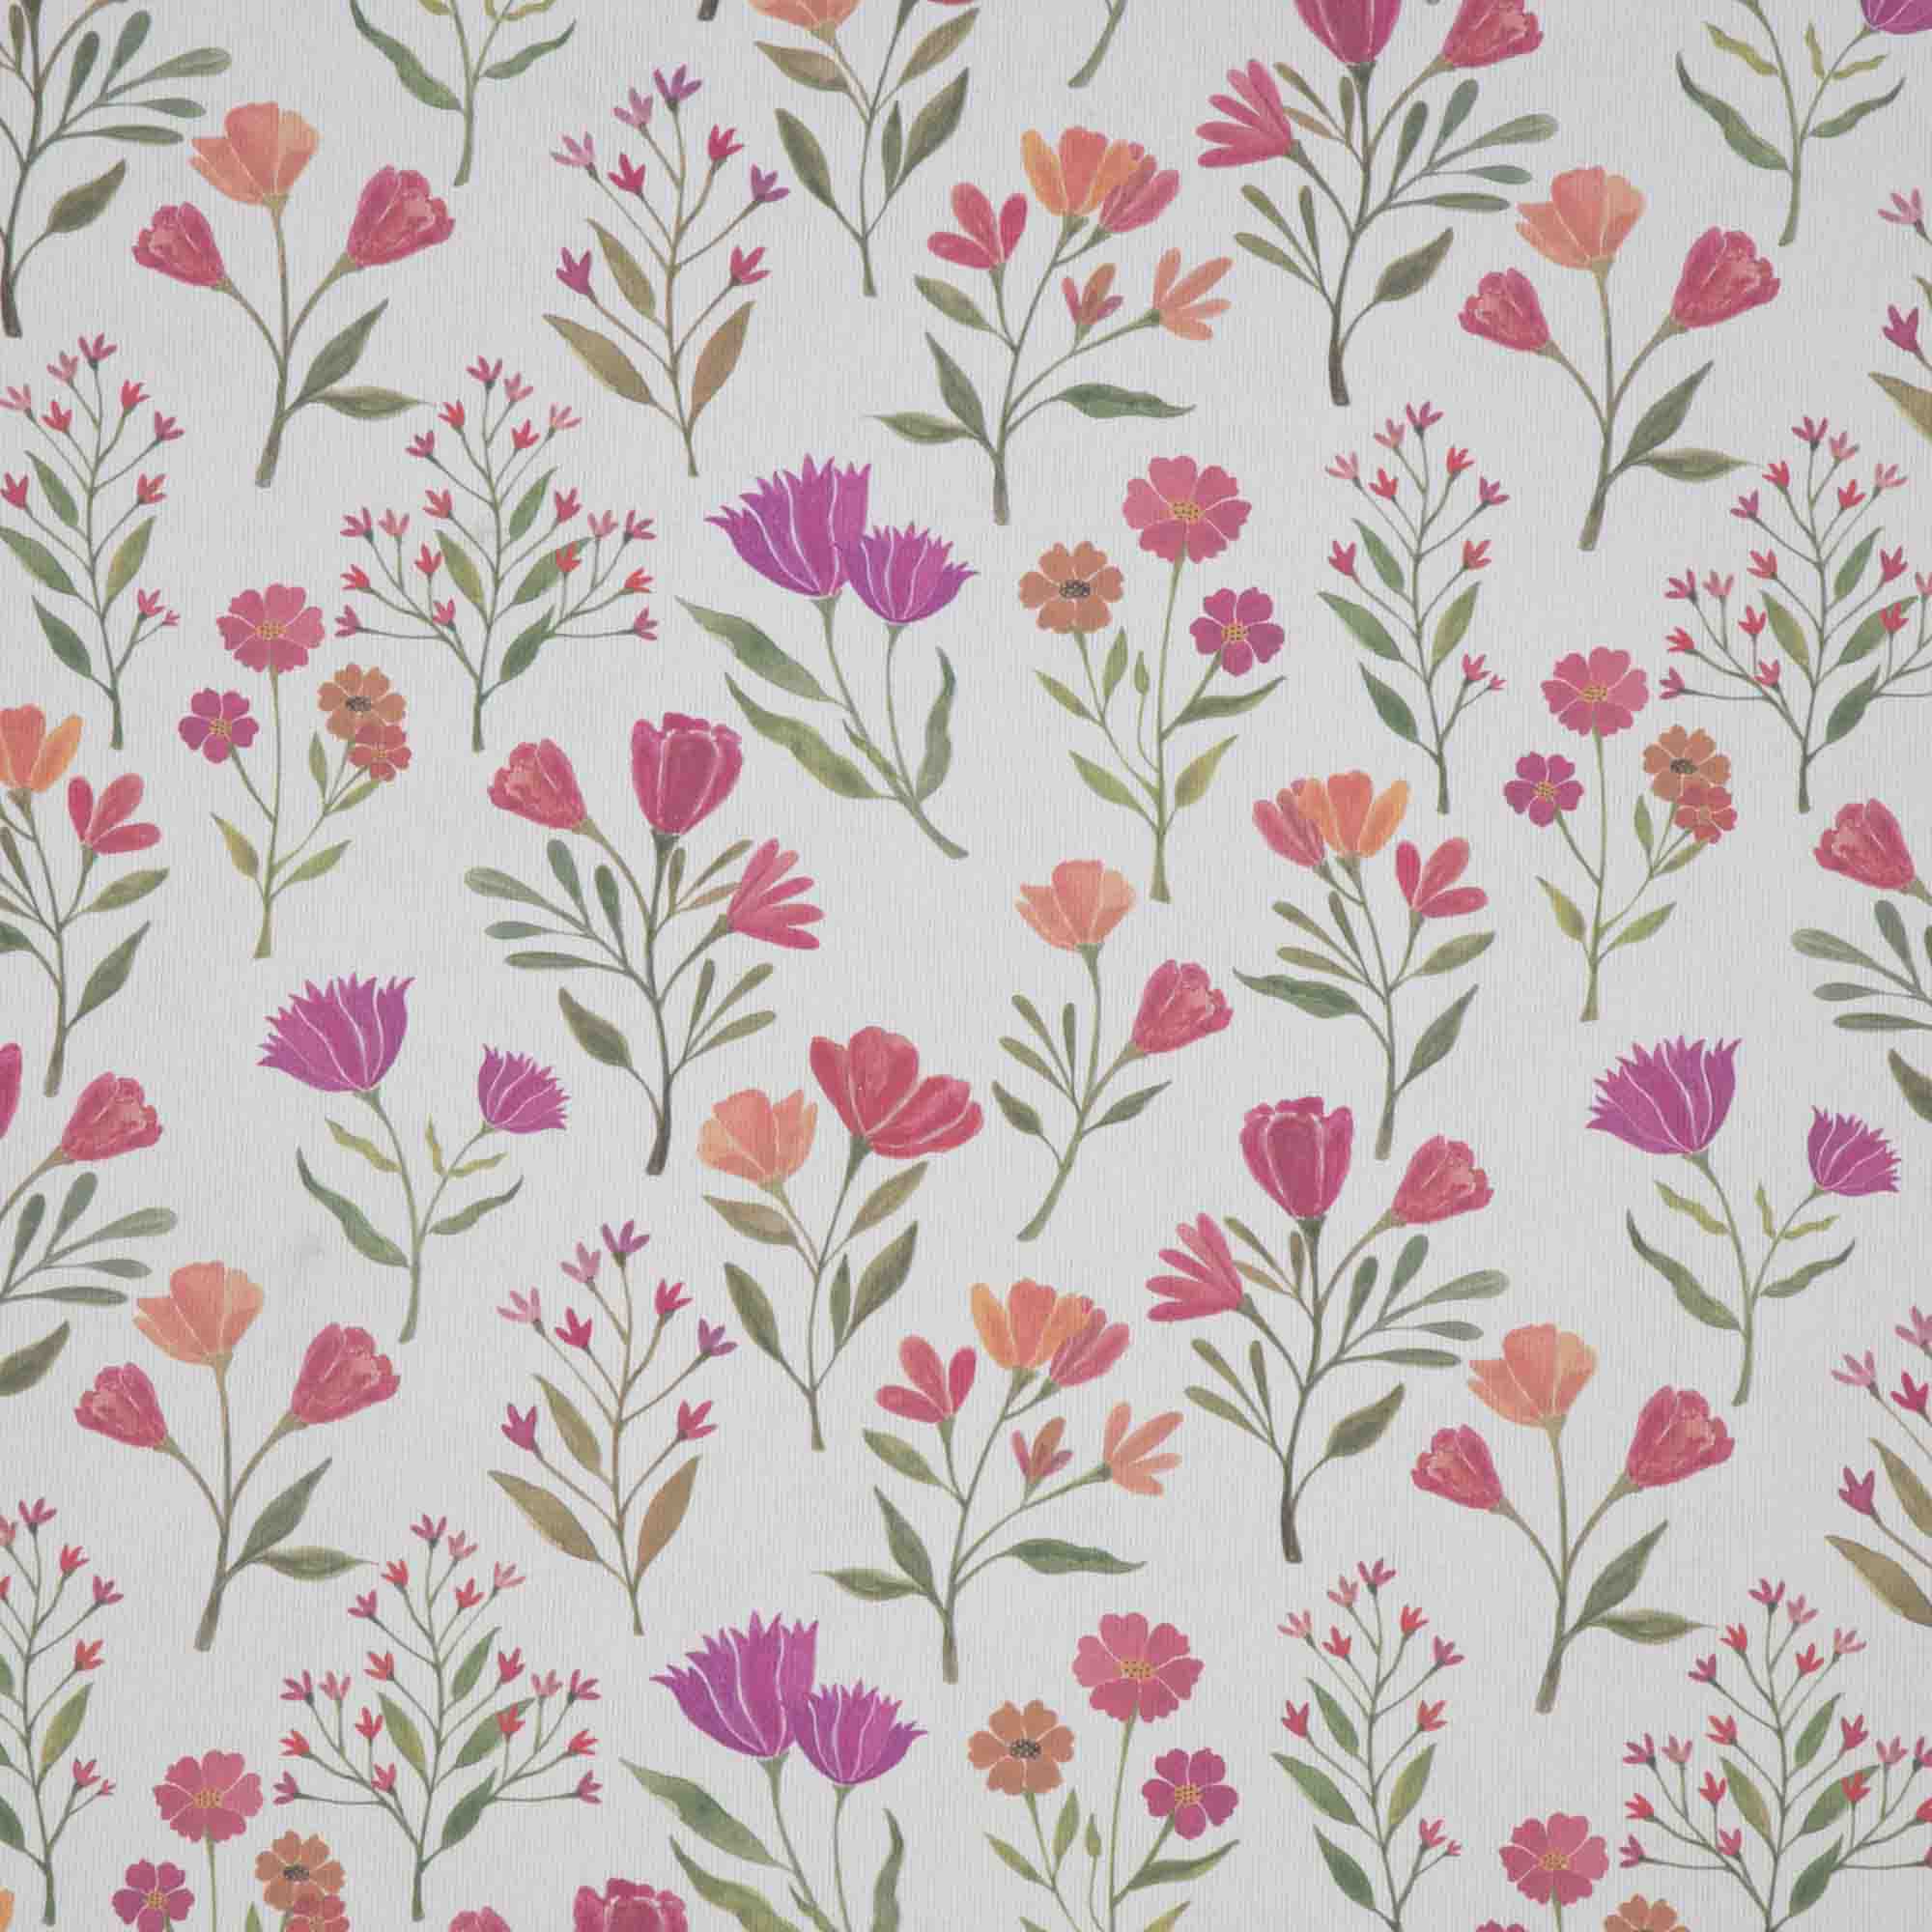 Princess Margaret’s Flower Garden - Wallpaper Swatch 18cm x 25cm